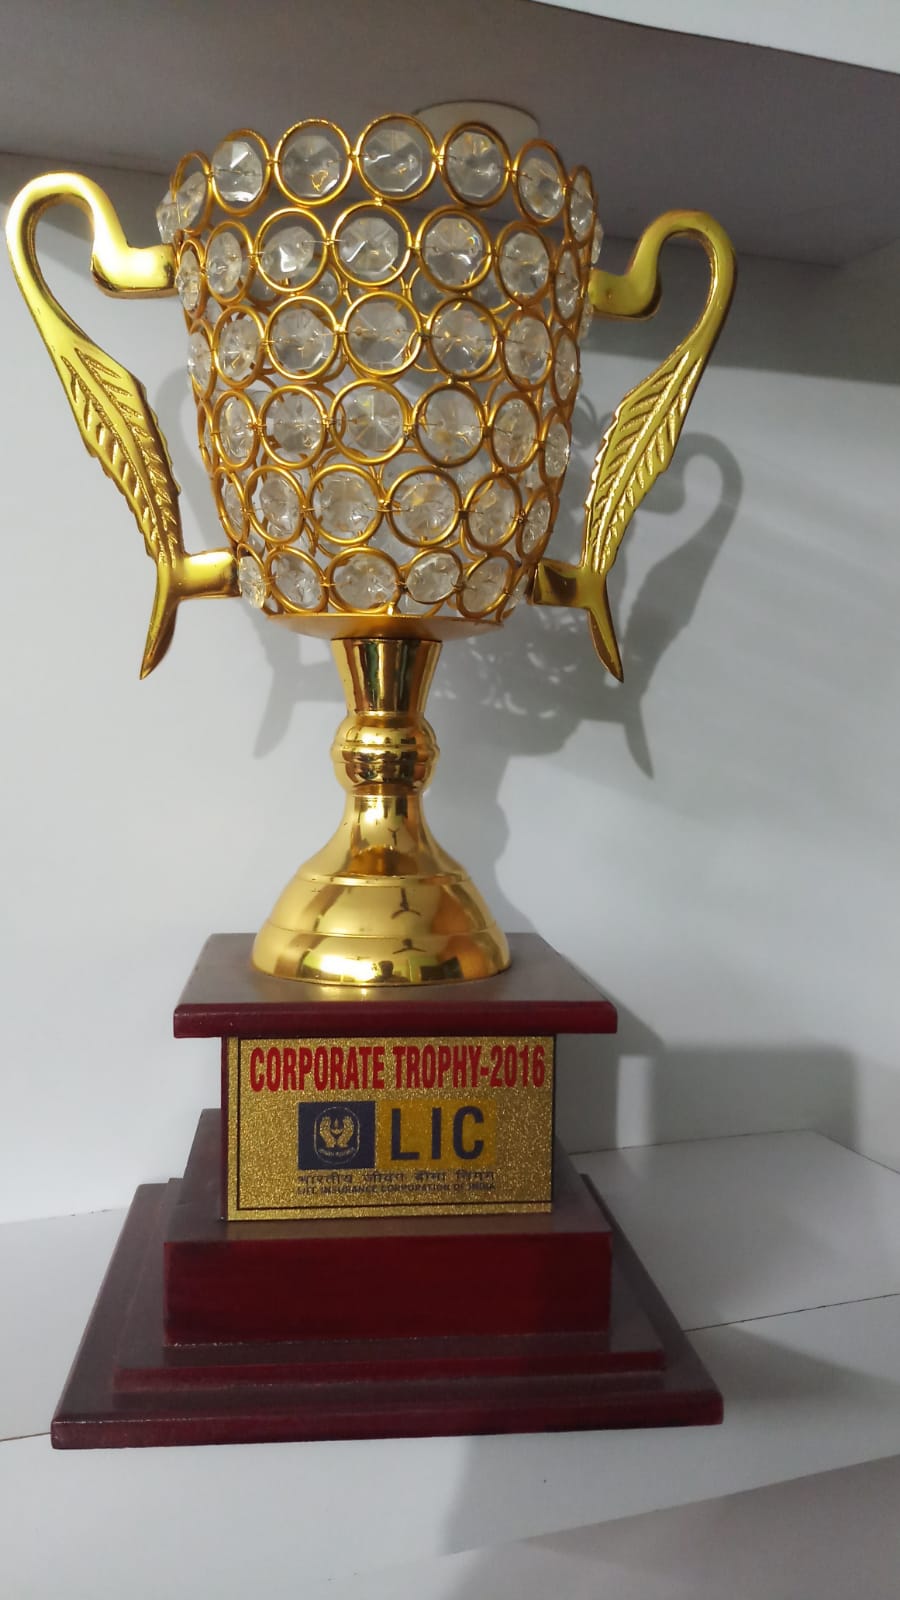 Corporate Trophy 2016